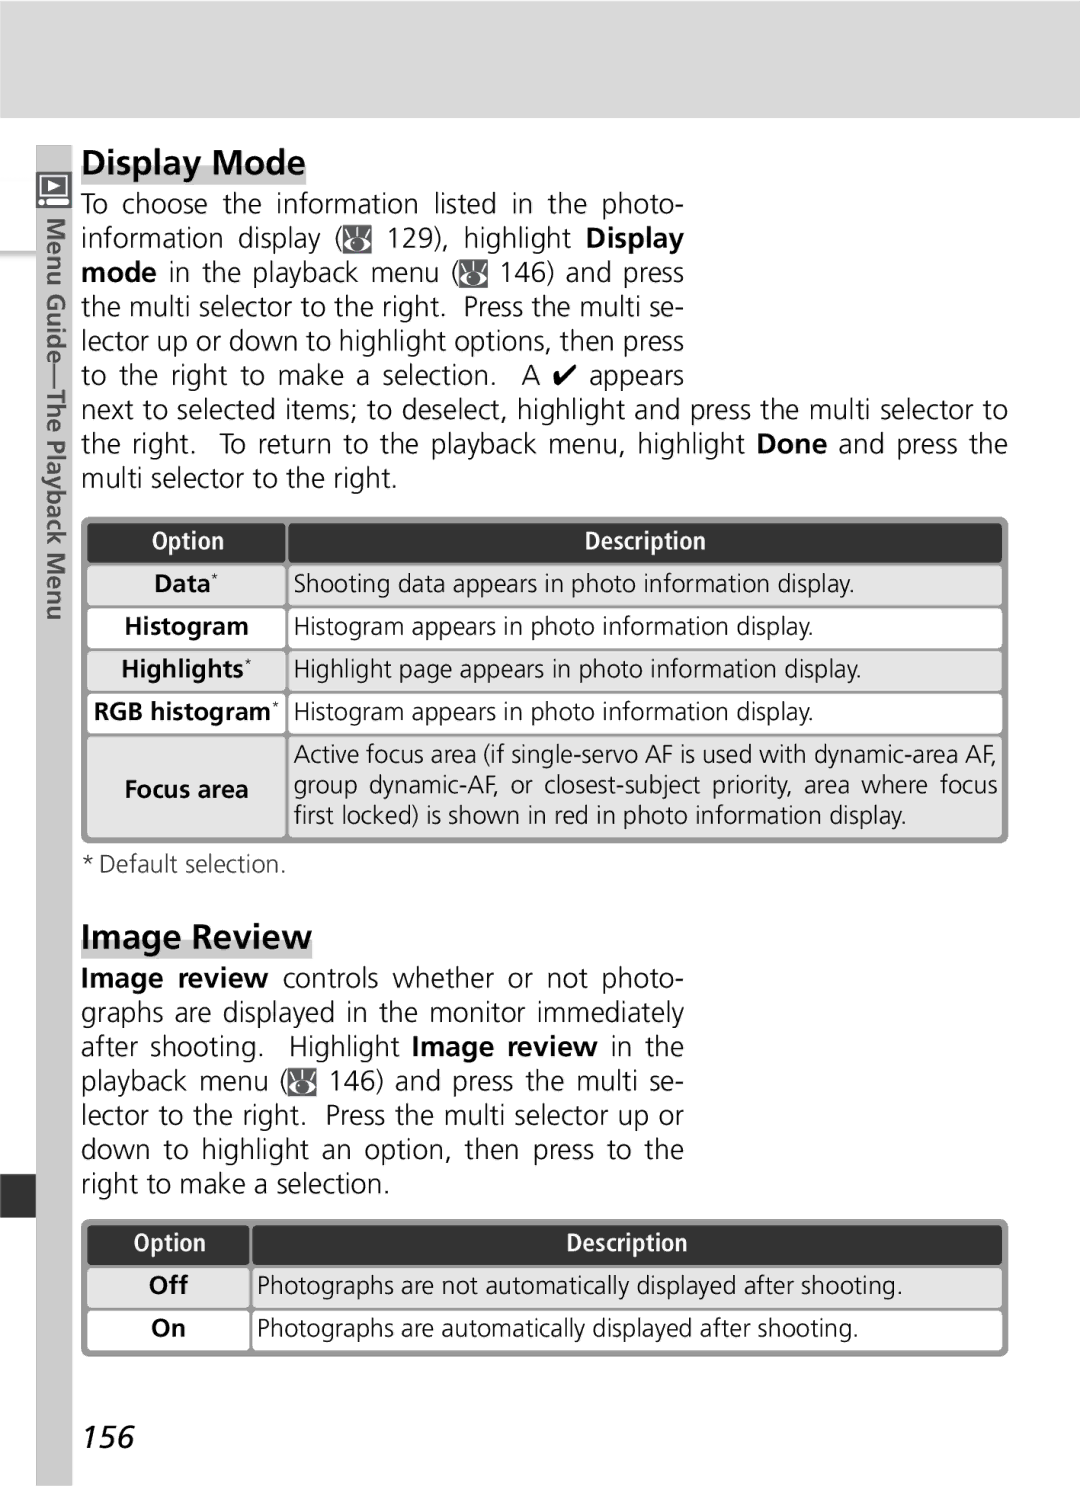 Nikon D2Hs manual Display Mode, Image Review, 156, Data 